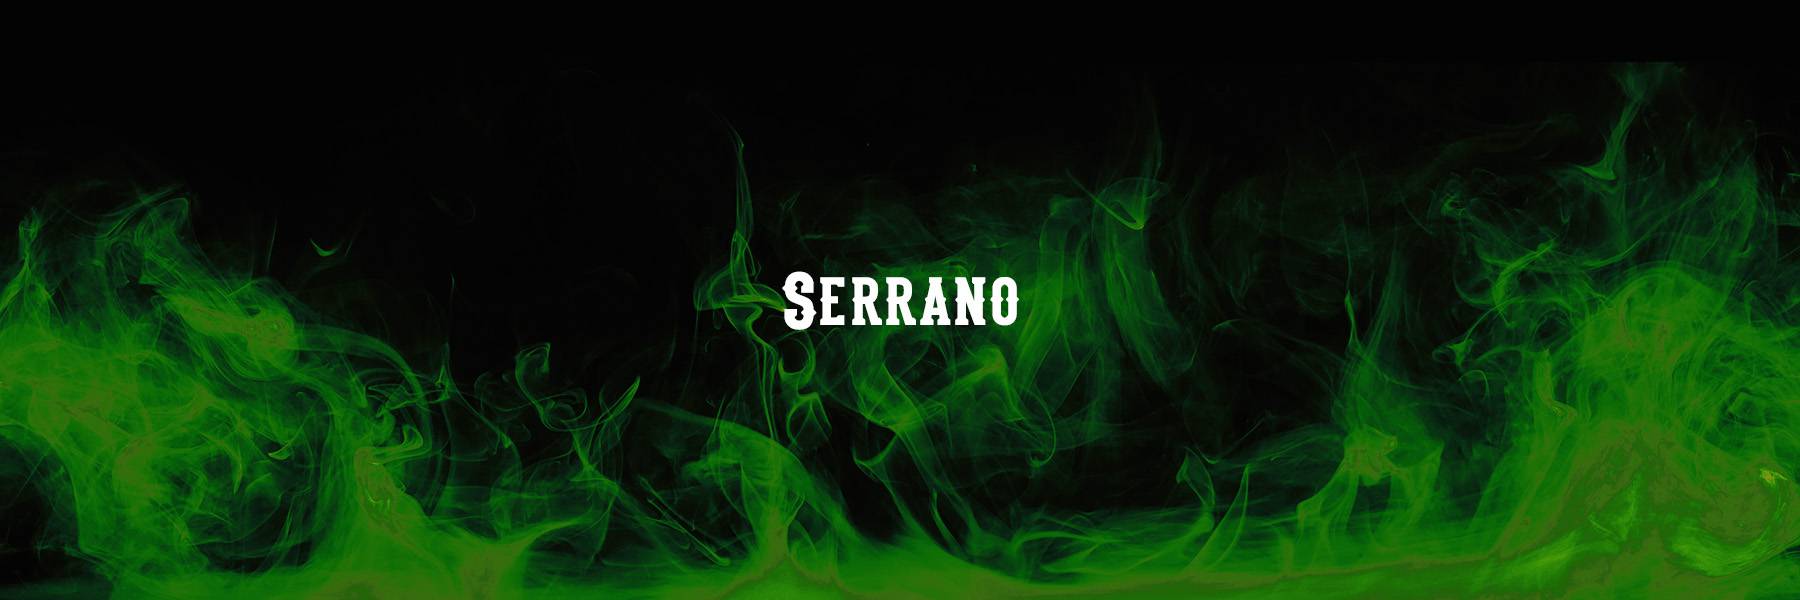 Serrano Peppers